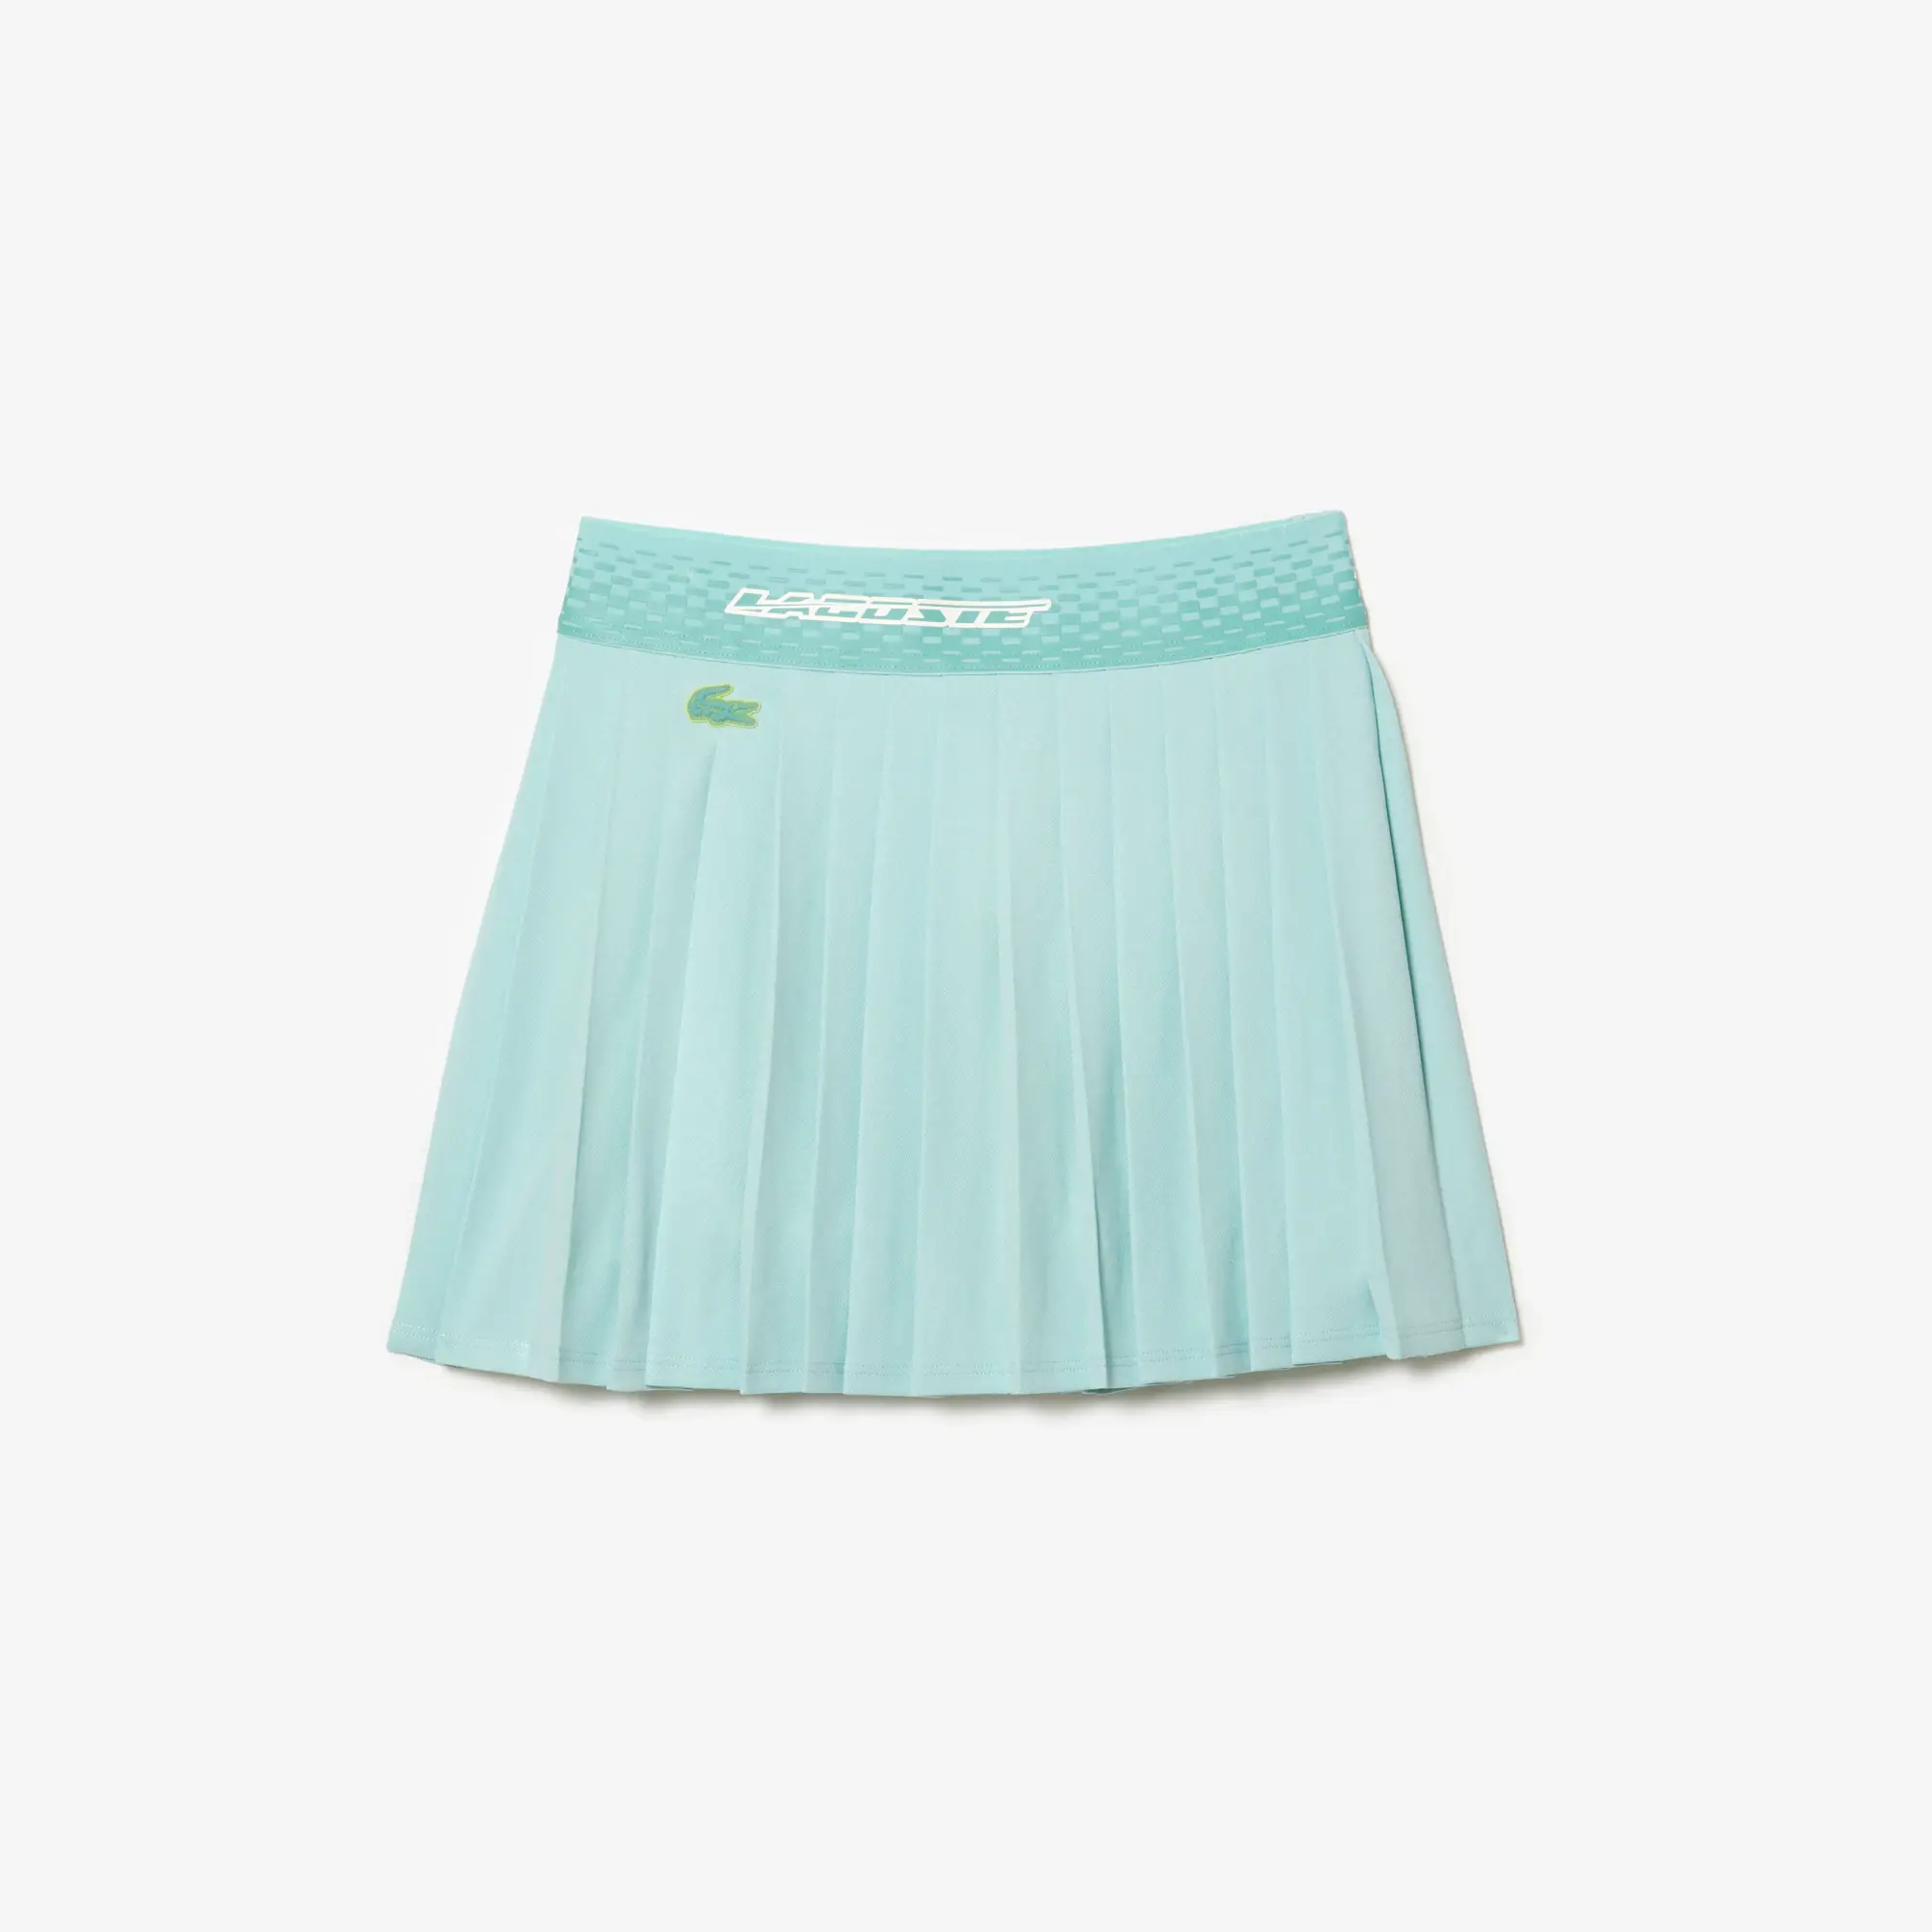 Lacoste Women’s Pleated Tennis Skirt. 2